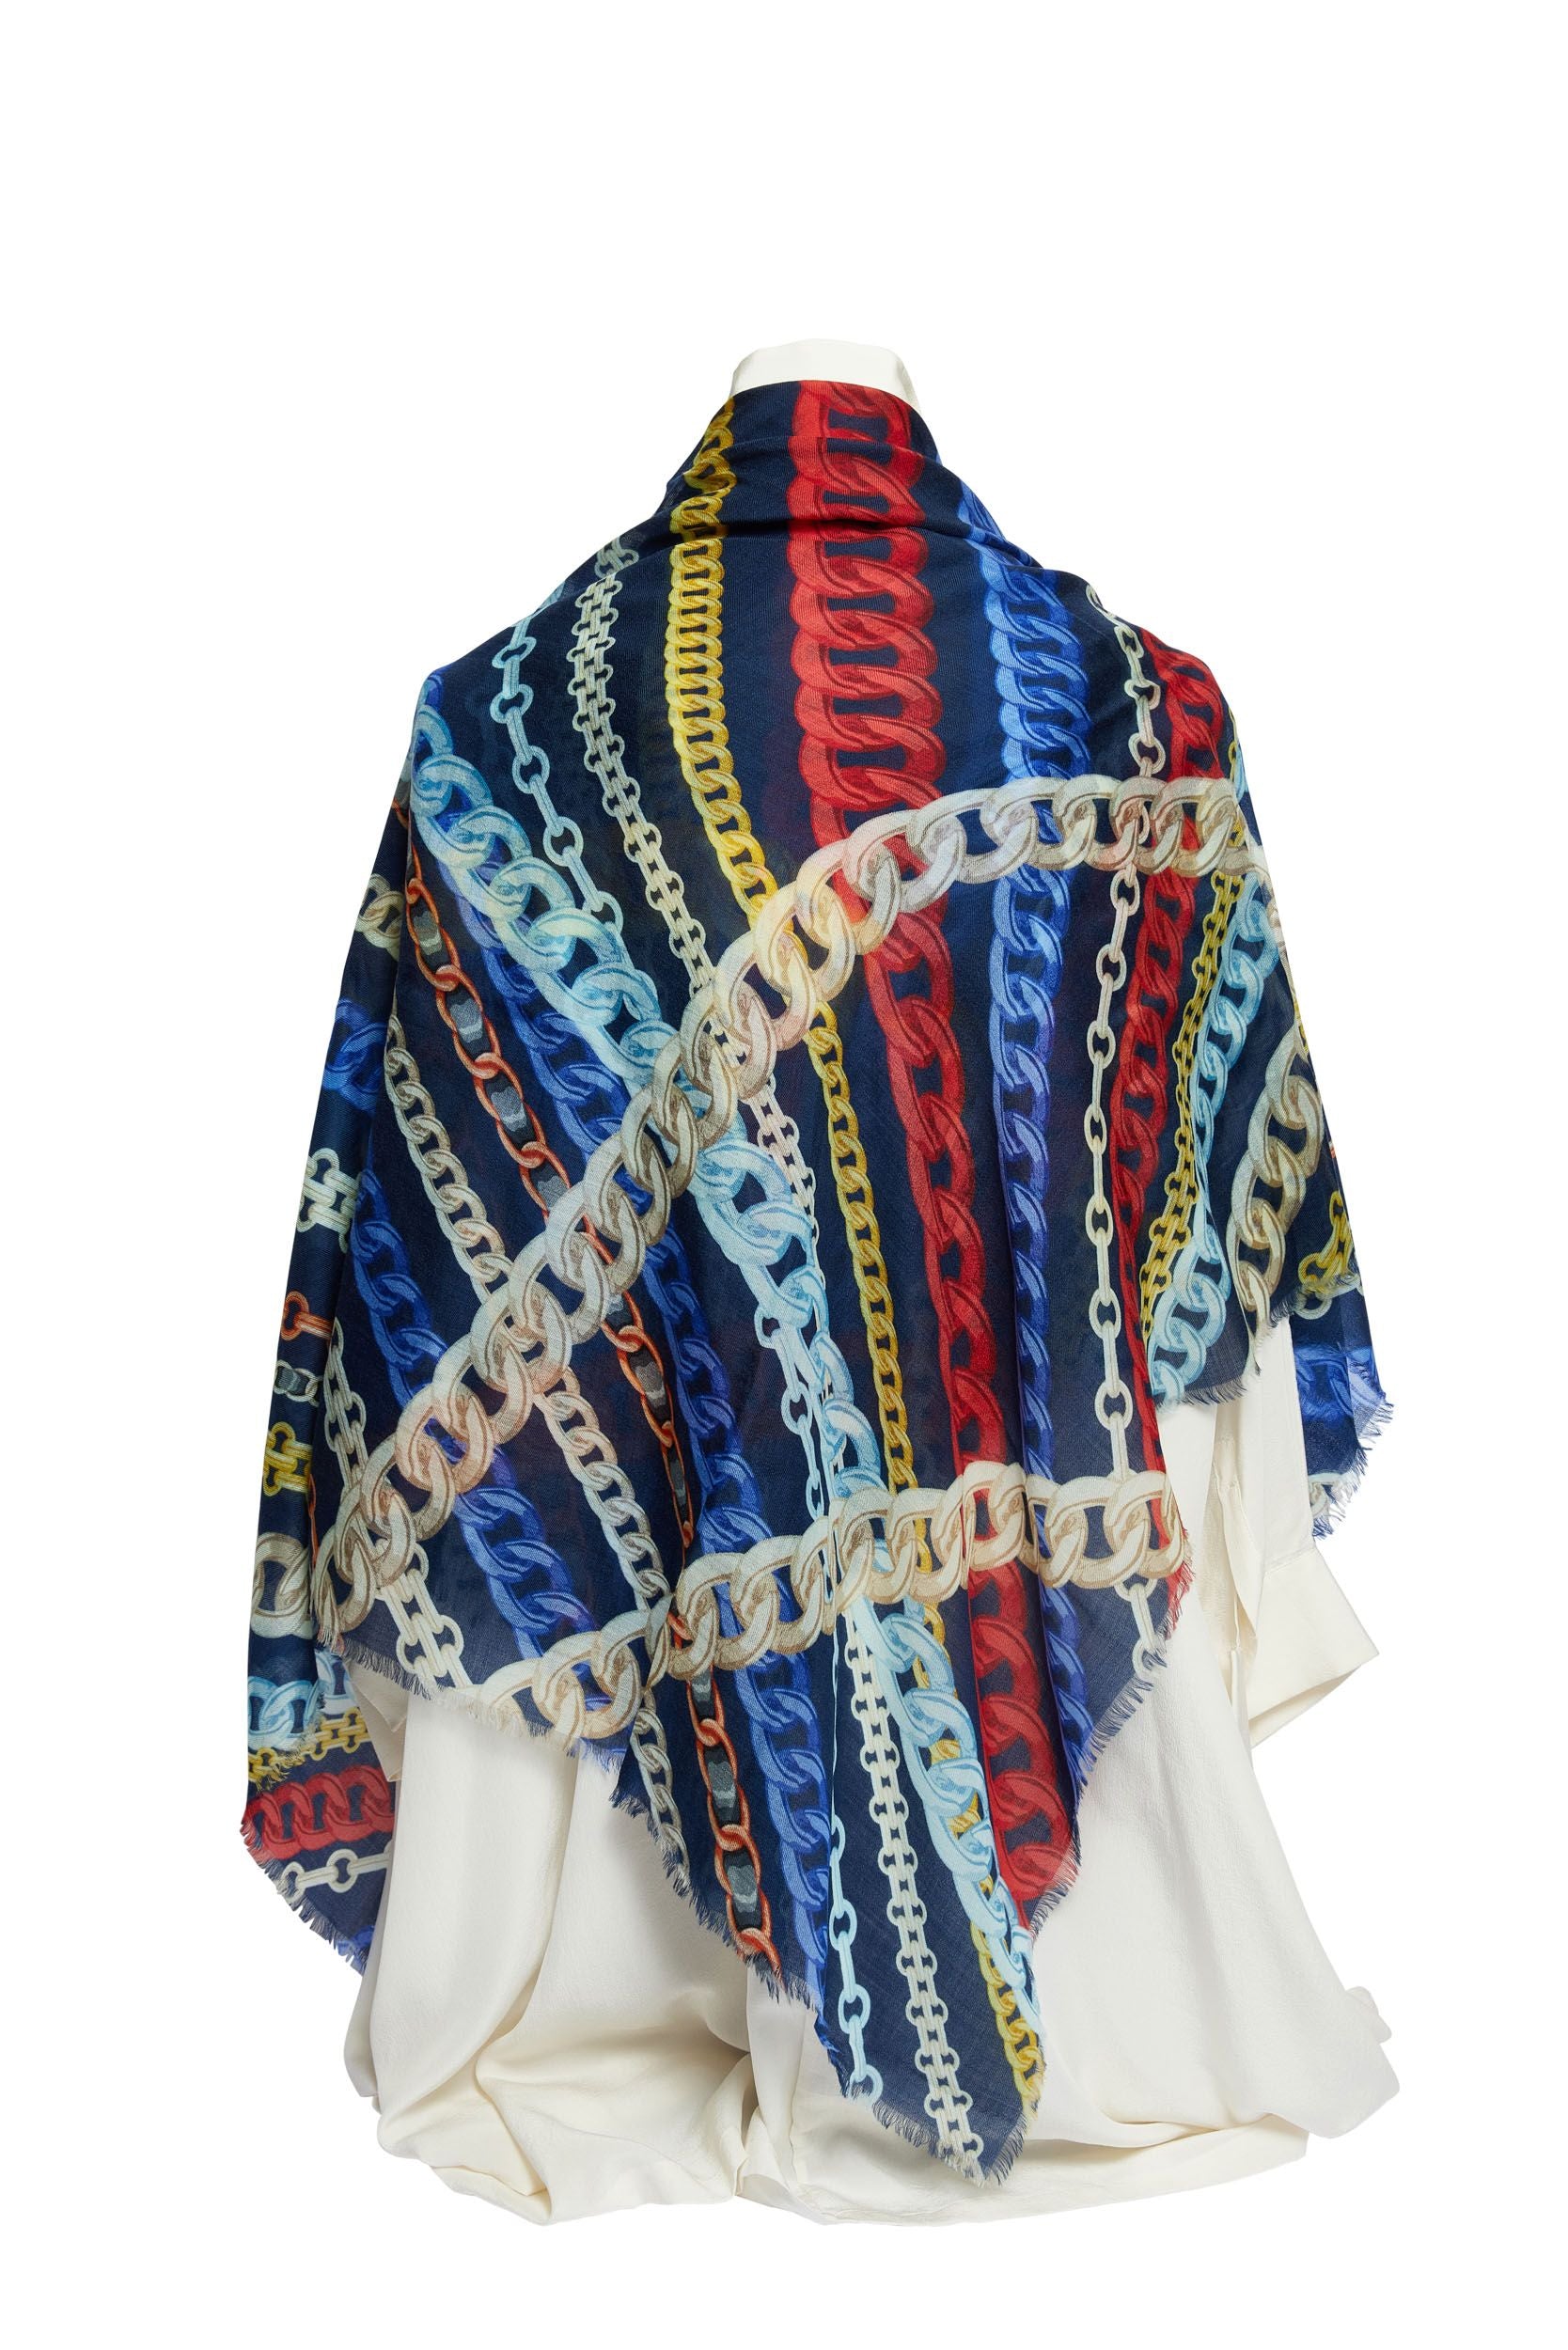 Chanel Multicolor Chains Cashmere Scarf - Vintage Lux